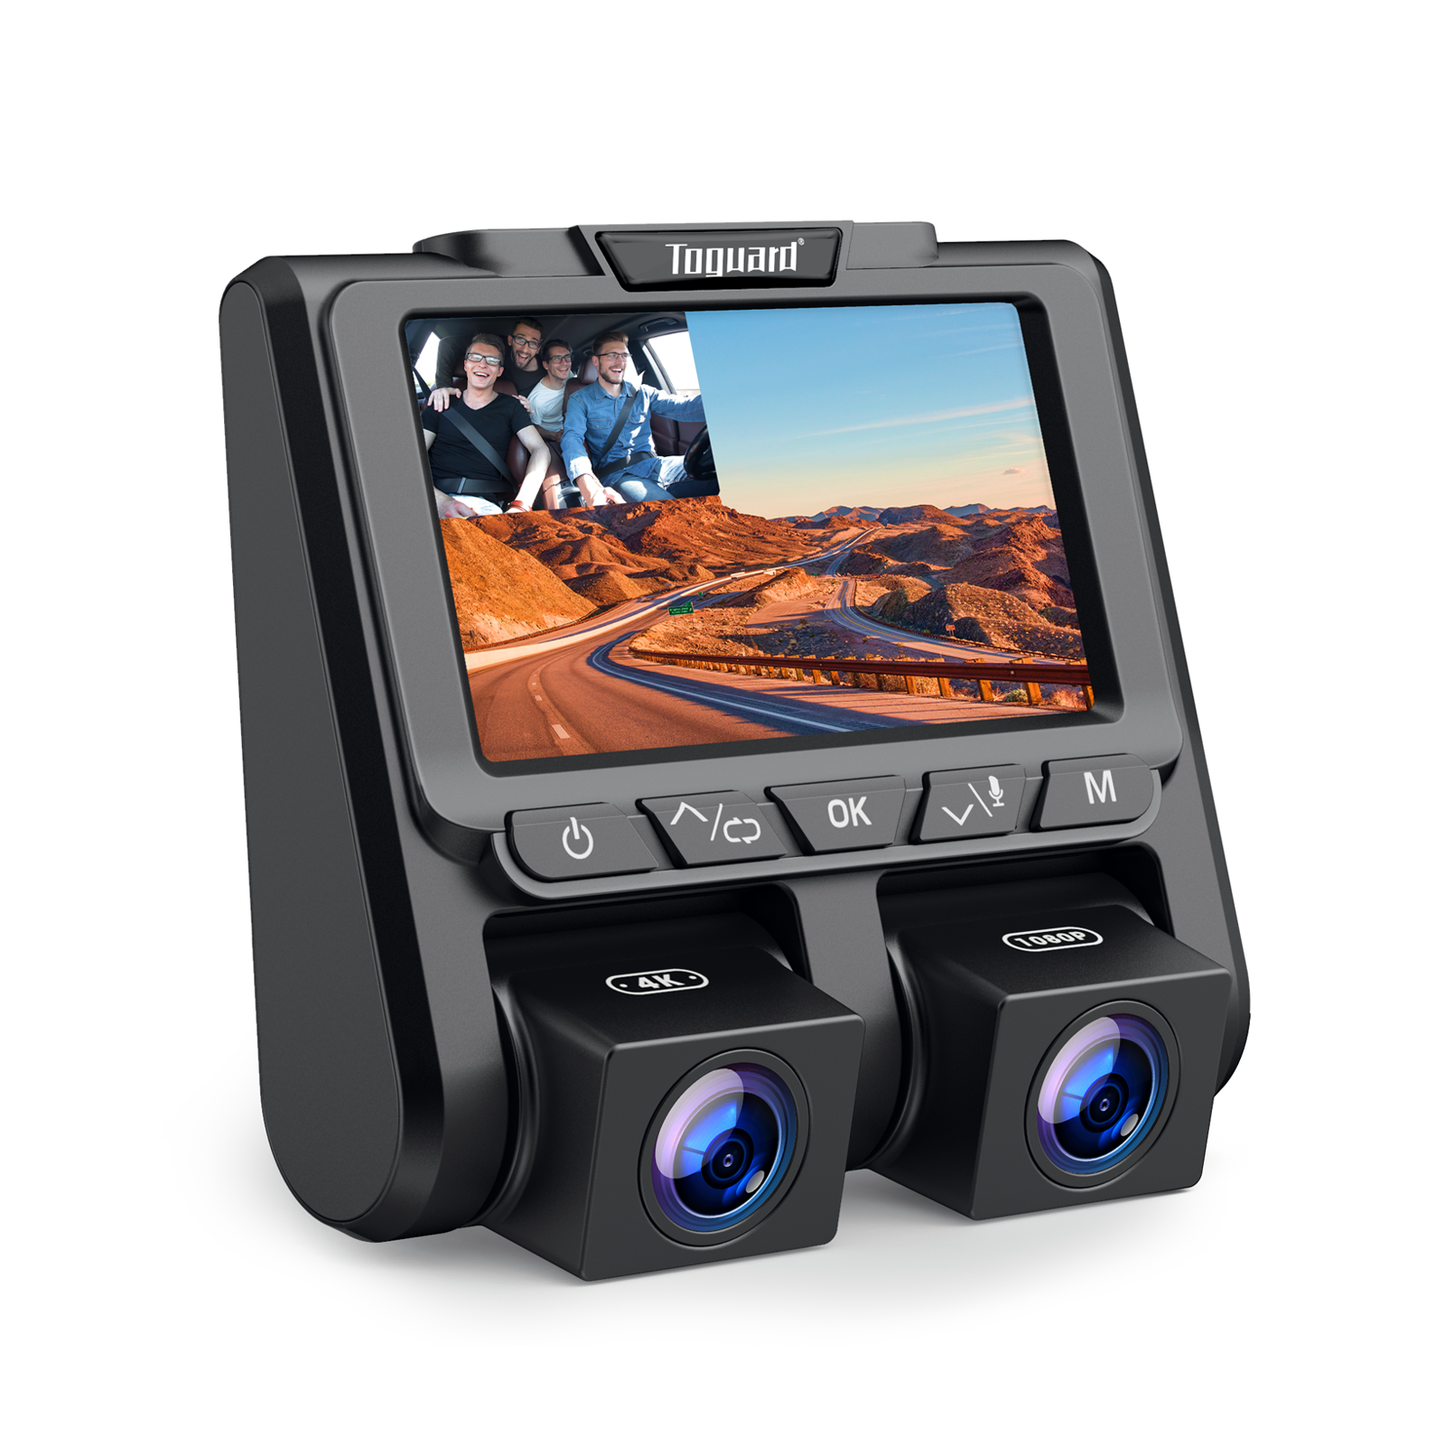 4K Dash Camera TOGUARD 4K+1080P Dash Cam Front and Inside 3" LCD Screen Car Camera Loop Recording Parking Mode G-Sensor